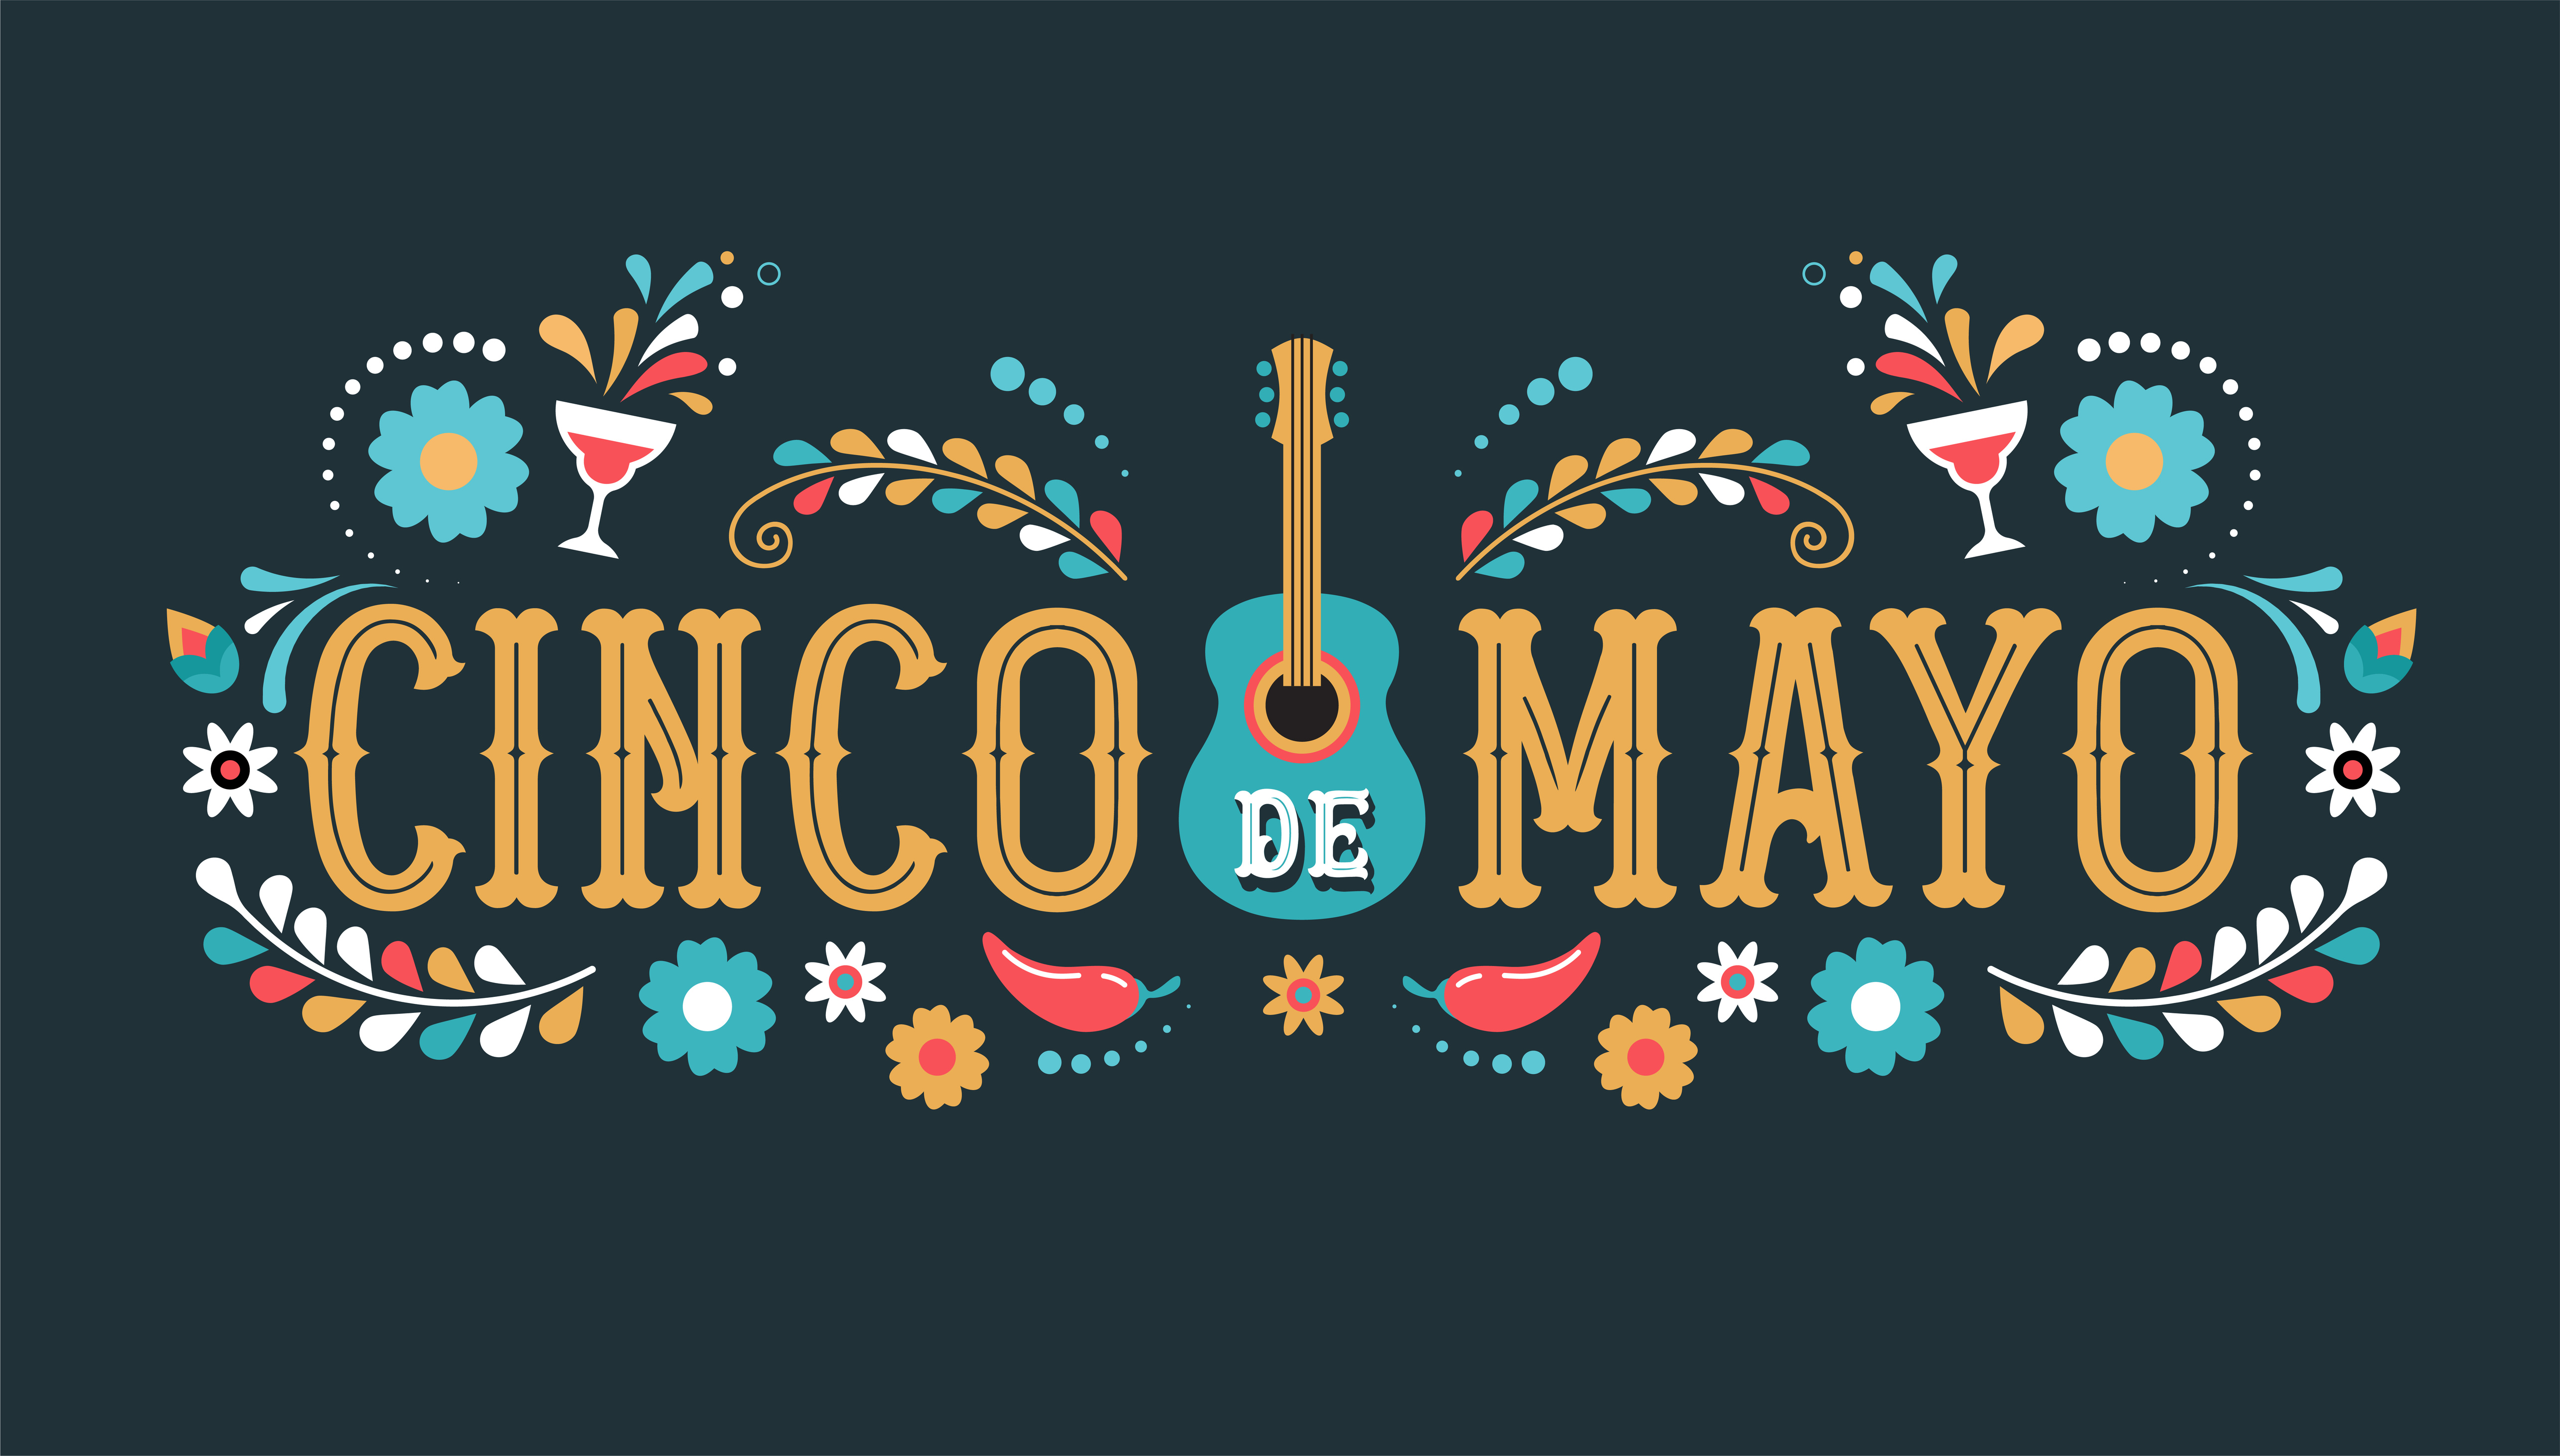 A decorative image saying "Cinco de Mayo."